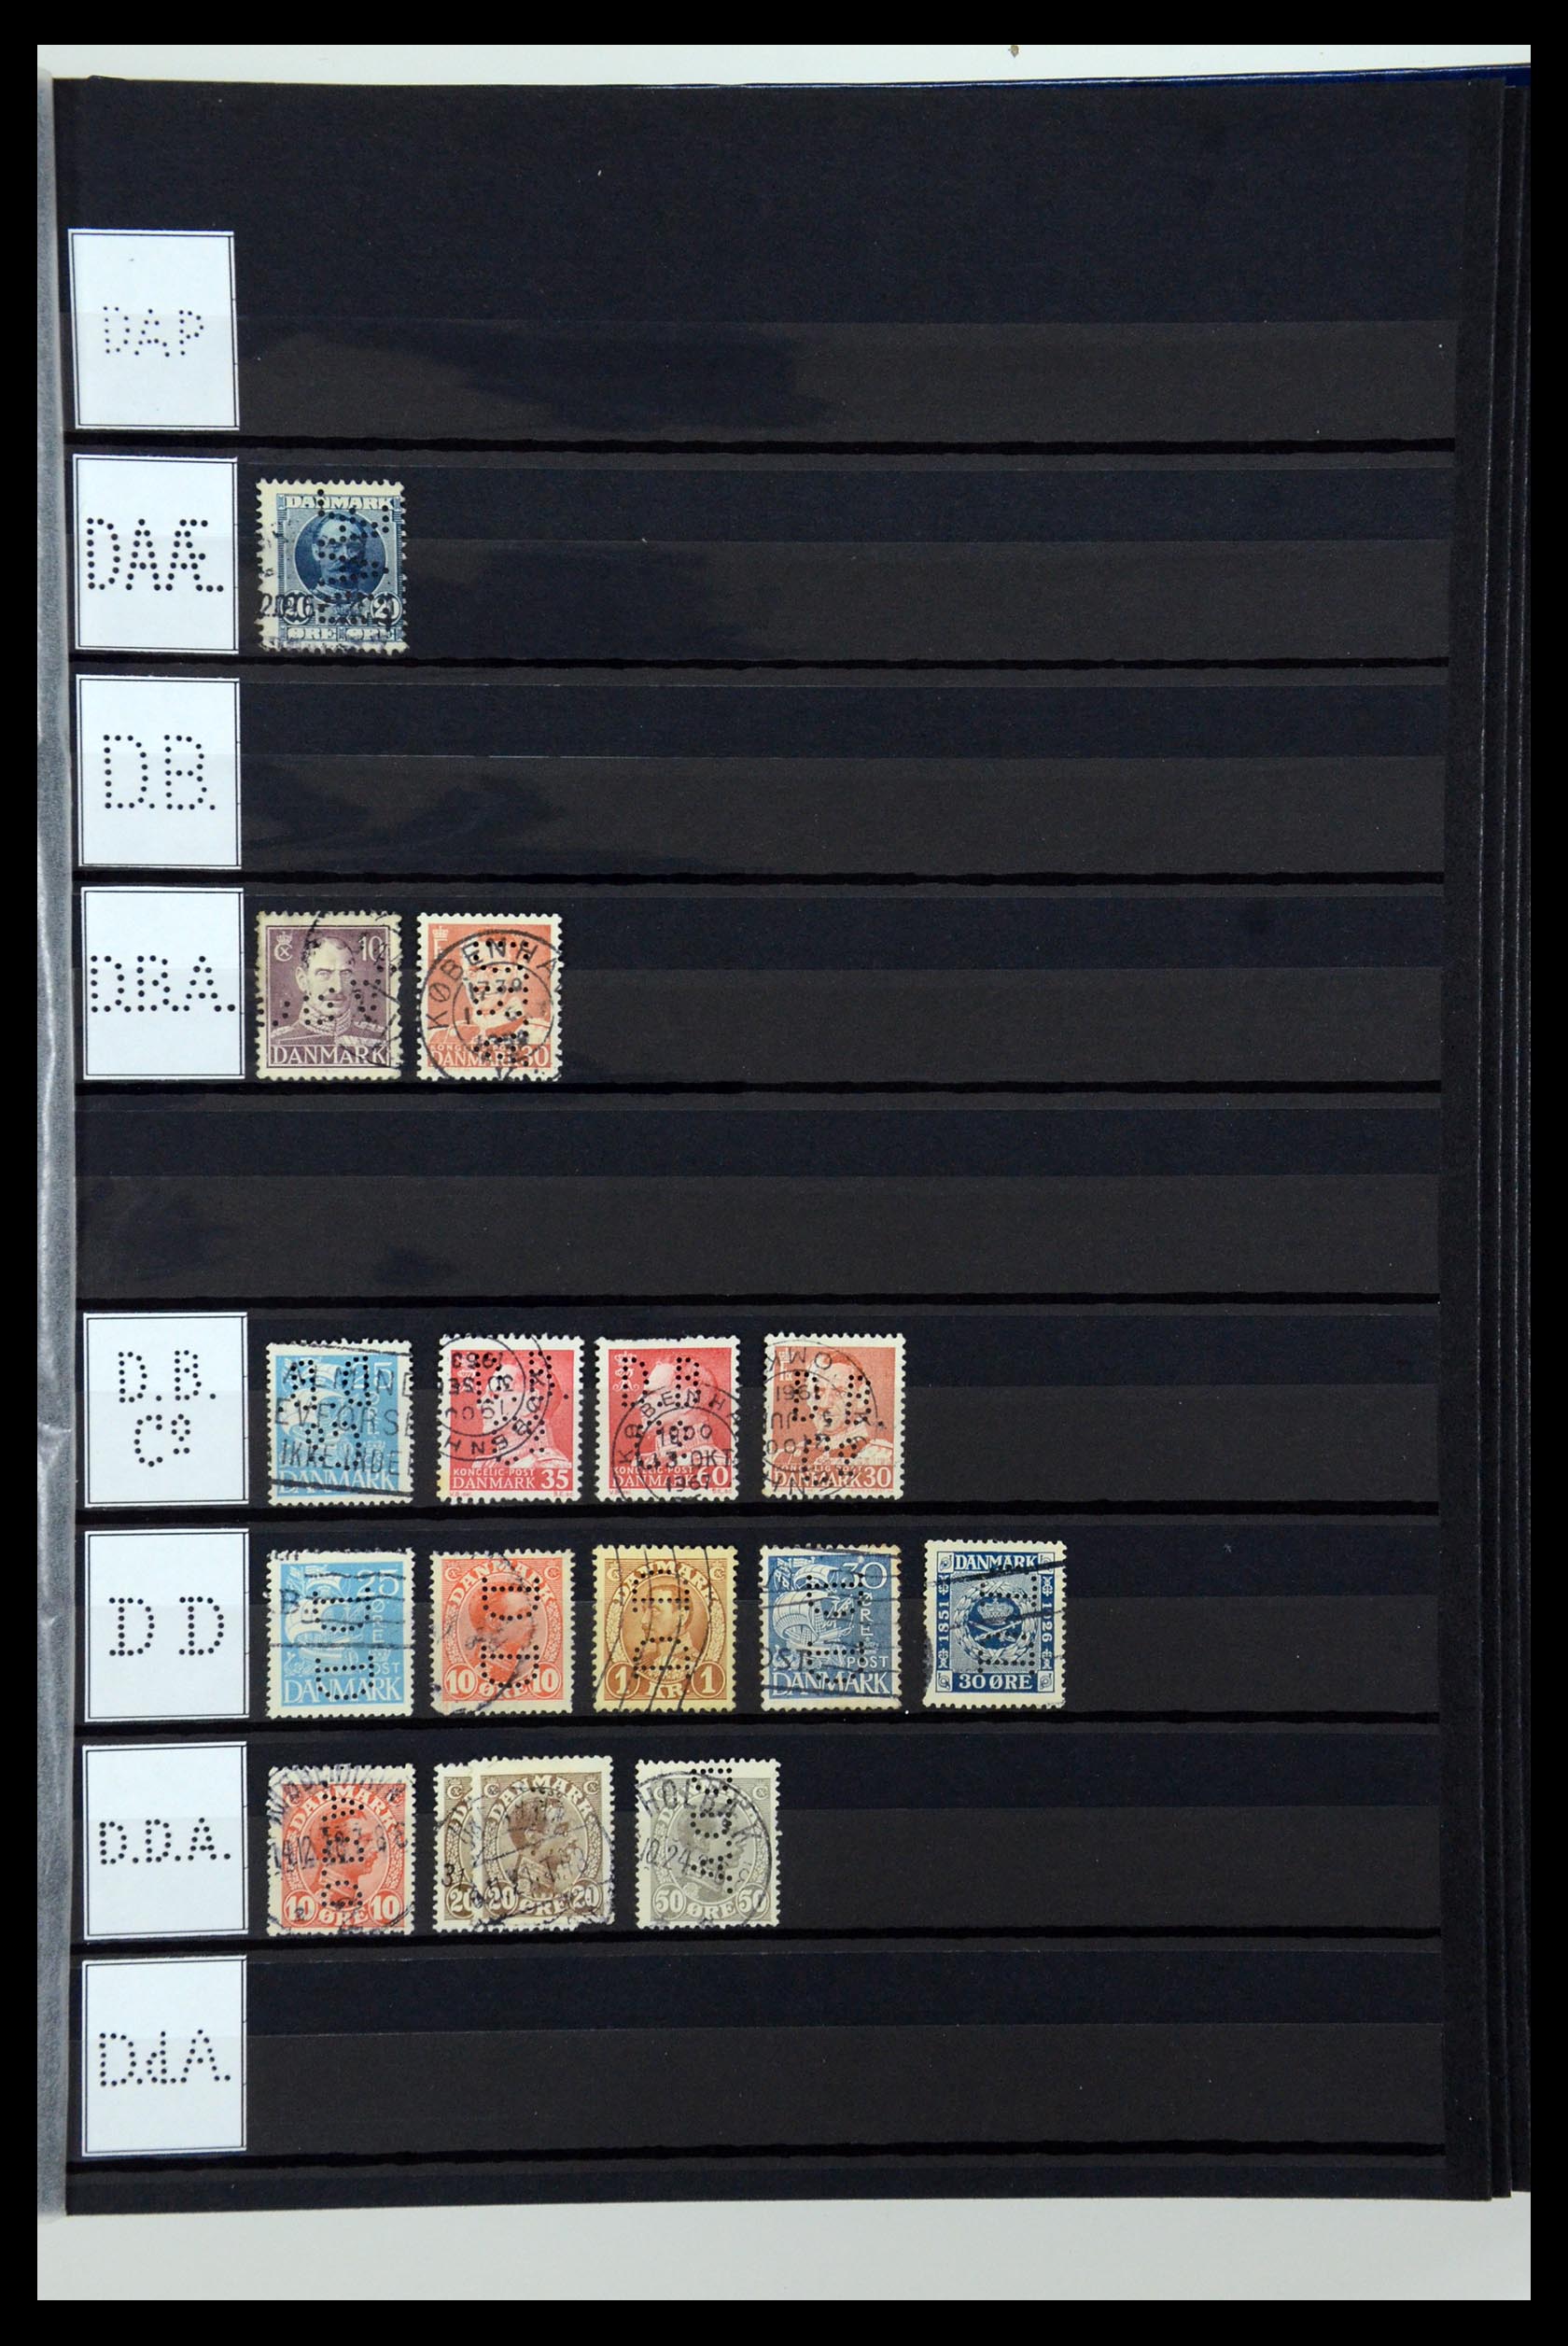 36396 033 - Stamp collection 36396 Denmark perfins.